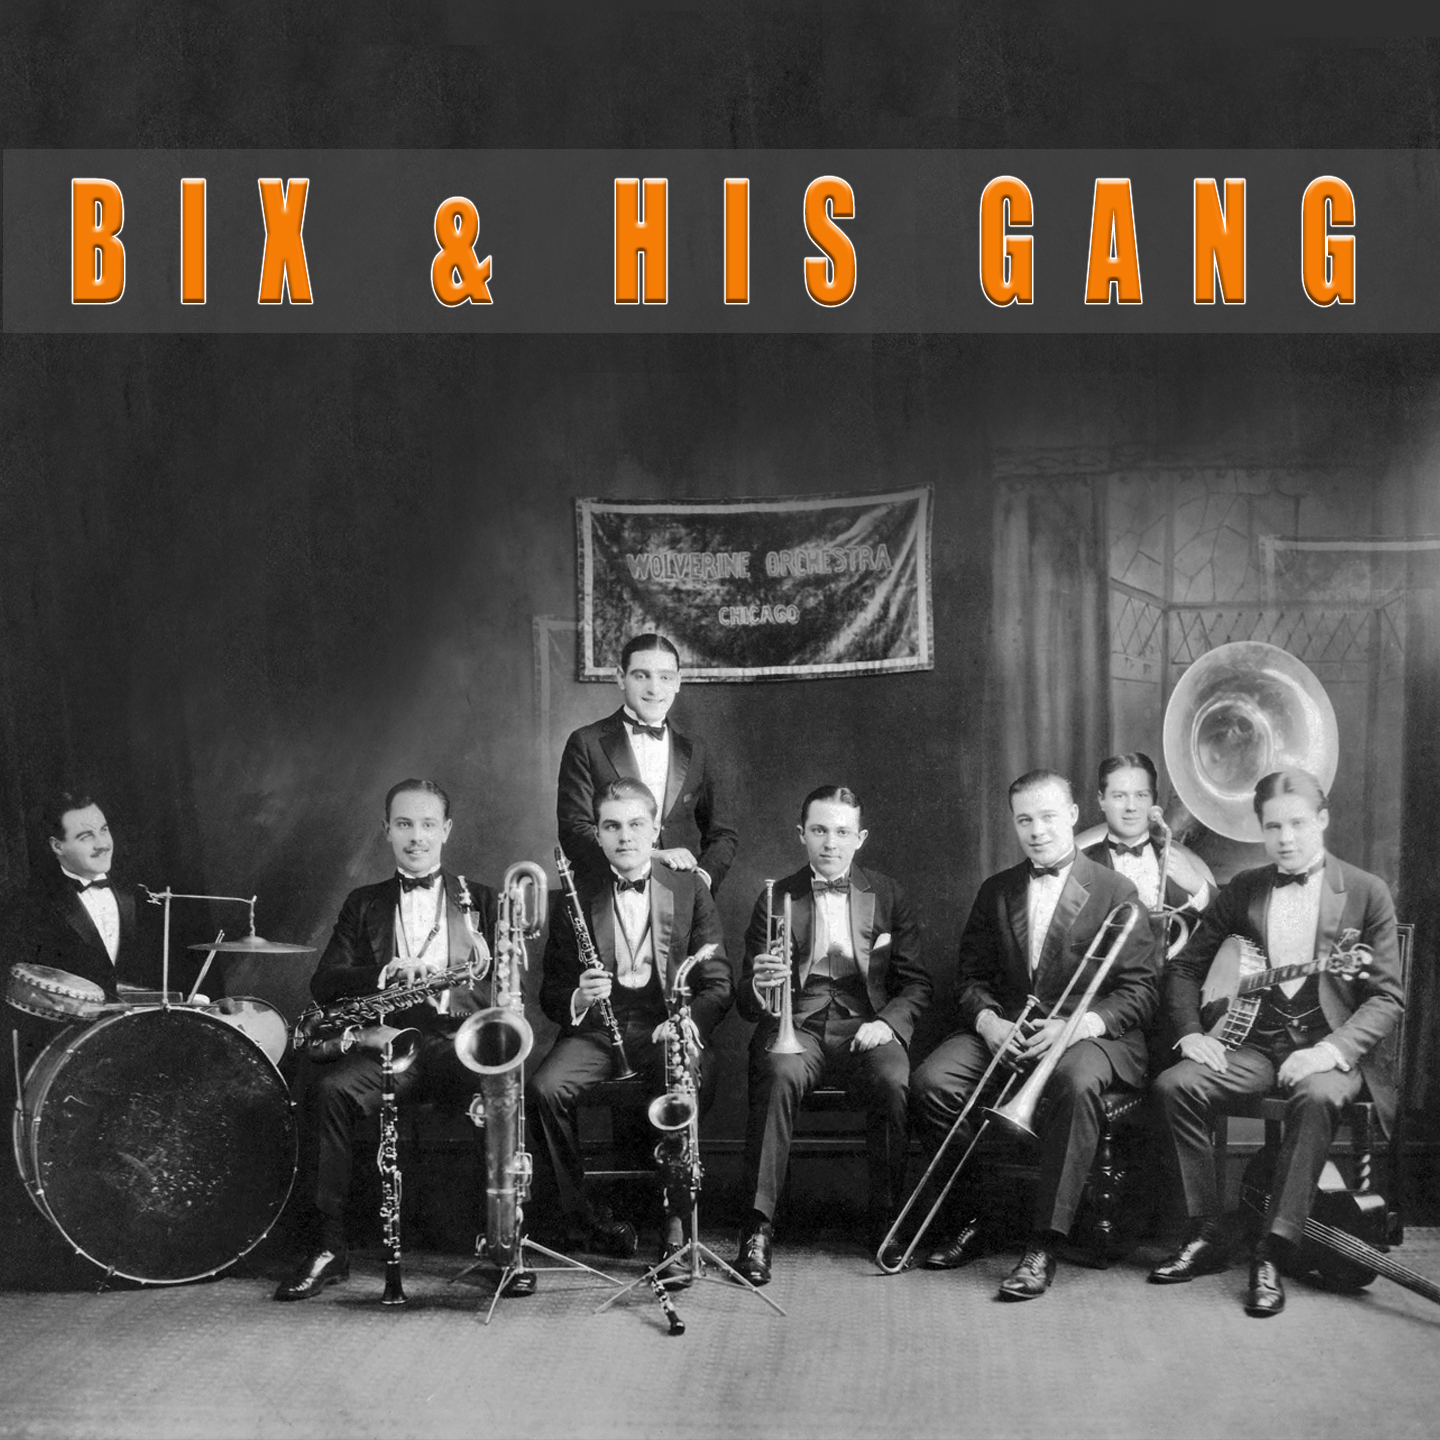 BIX BEIDERBECKE AND HIS GANG　 USCOLUMBIA盤　36156「JAZZ ME BLUES/AT THE JAZZ BAND BALL」ビックス・バイダーベック